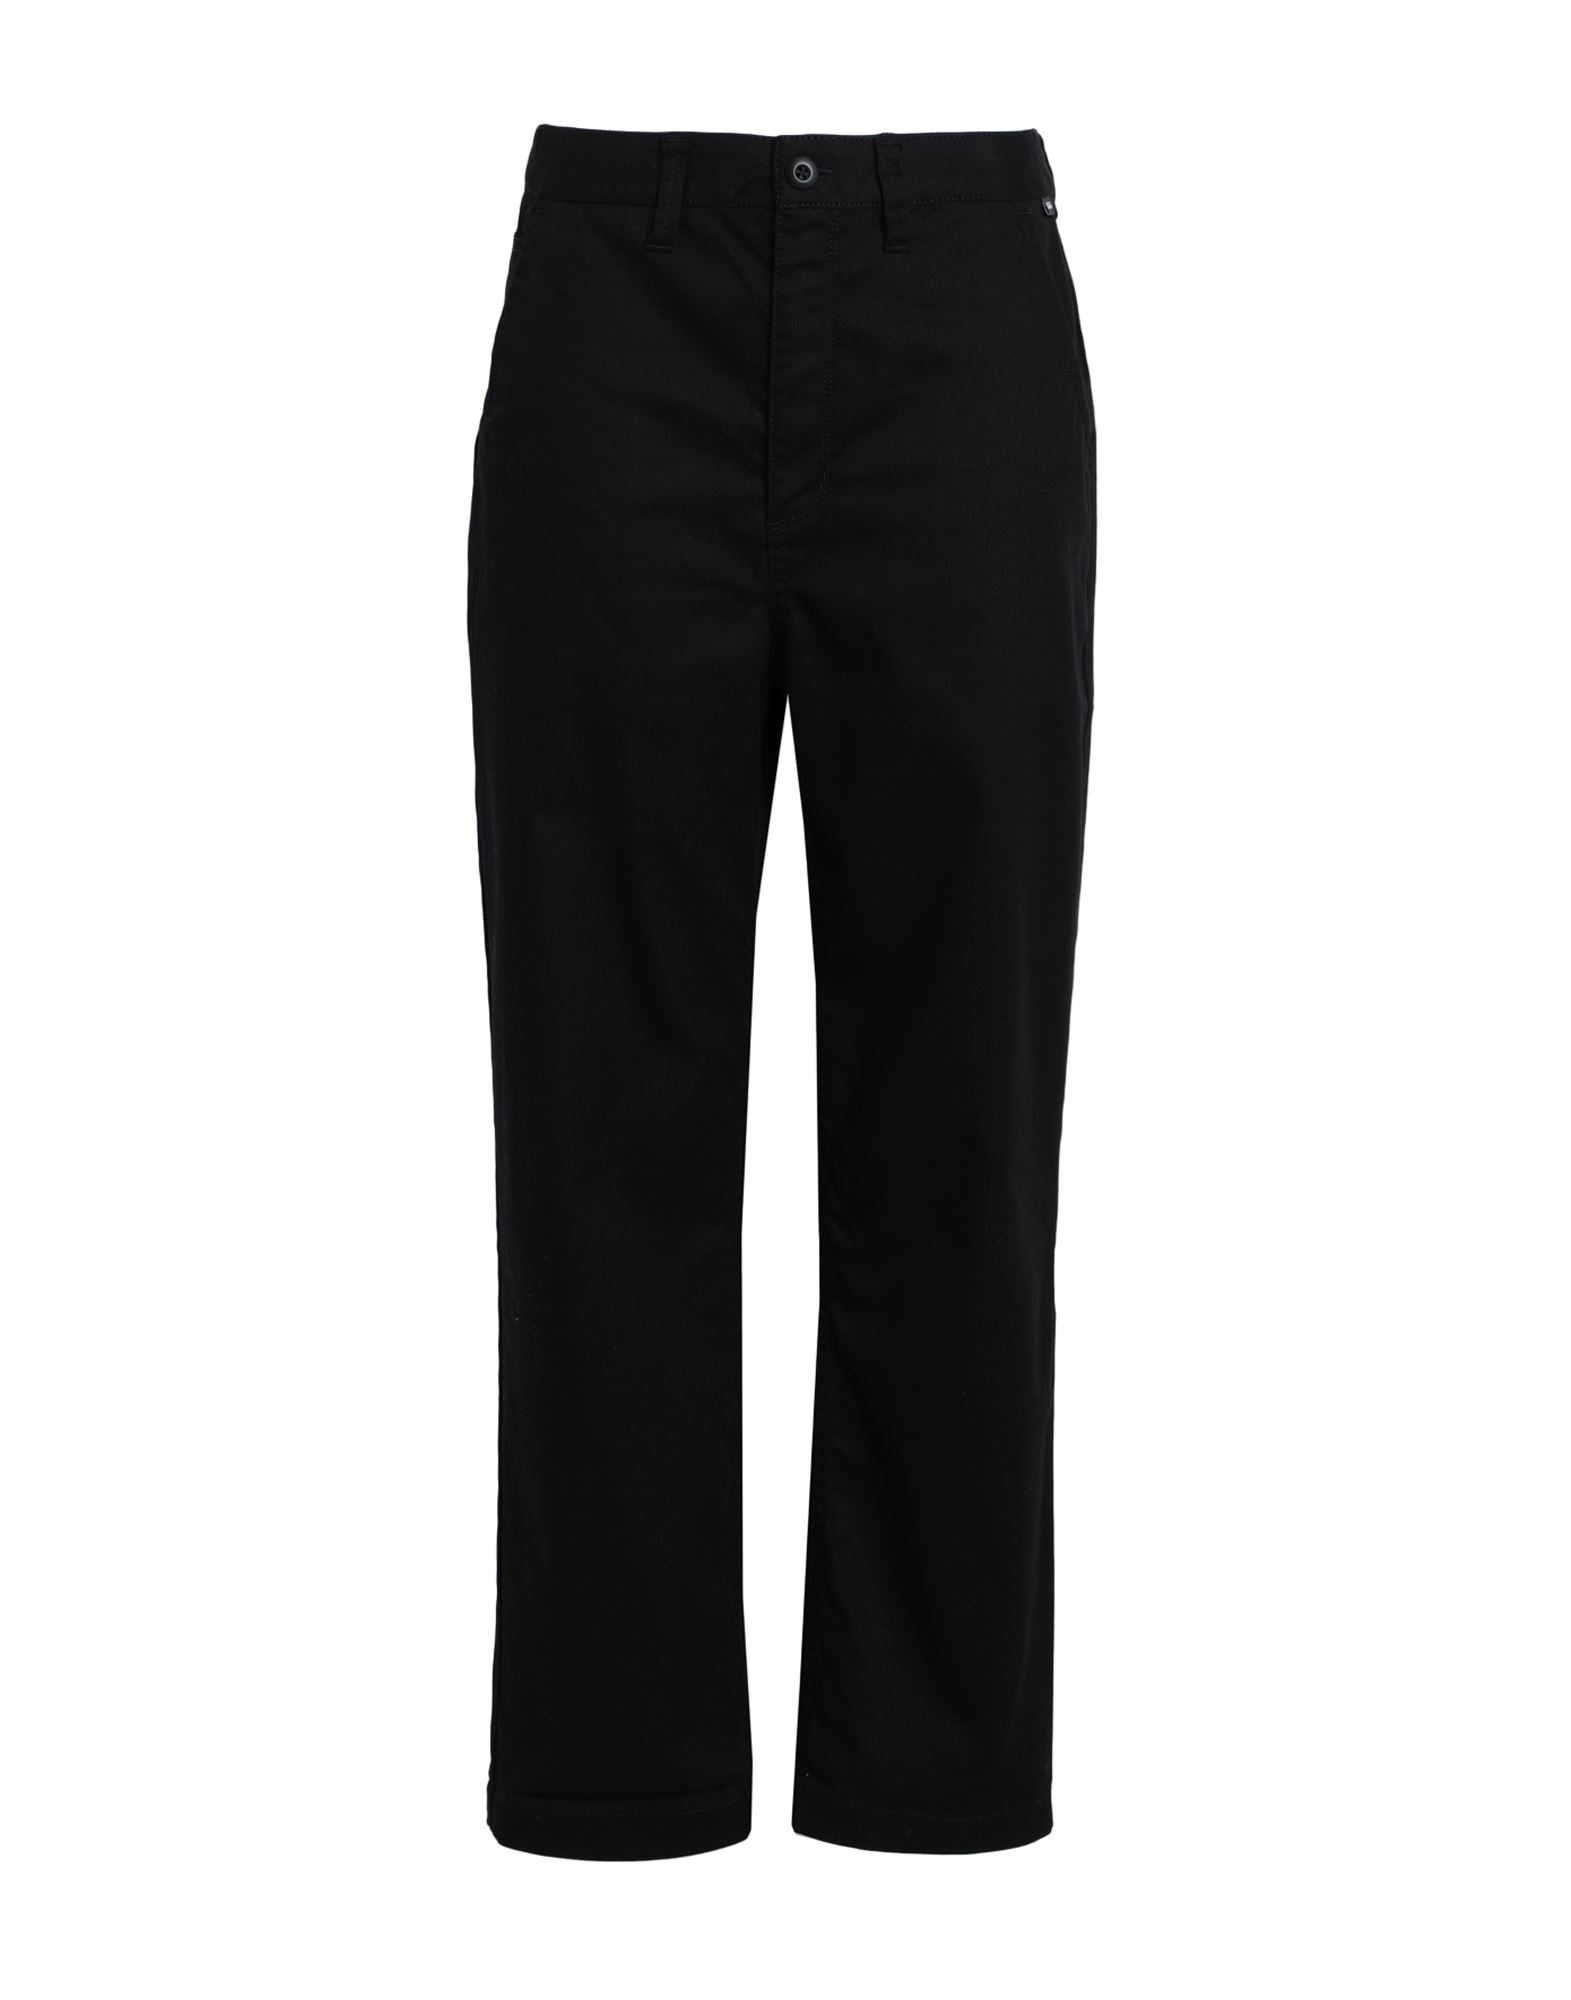 Vans Wm Authentic Wmn Chino Woman Pants Black Size 25 Cotton, Polyester, Elastane